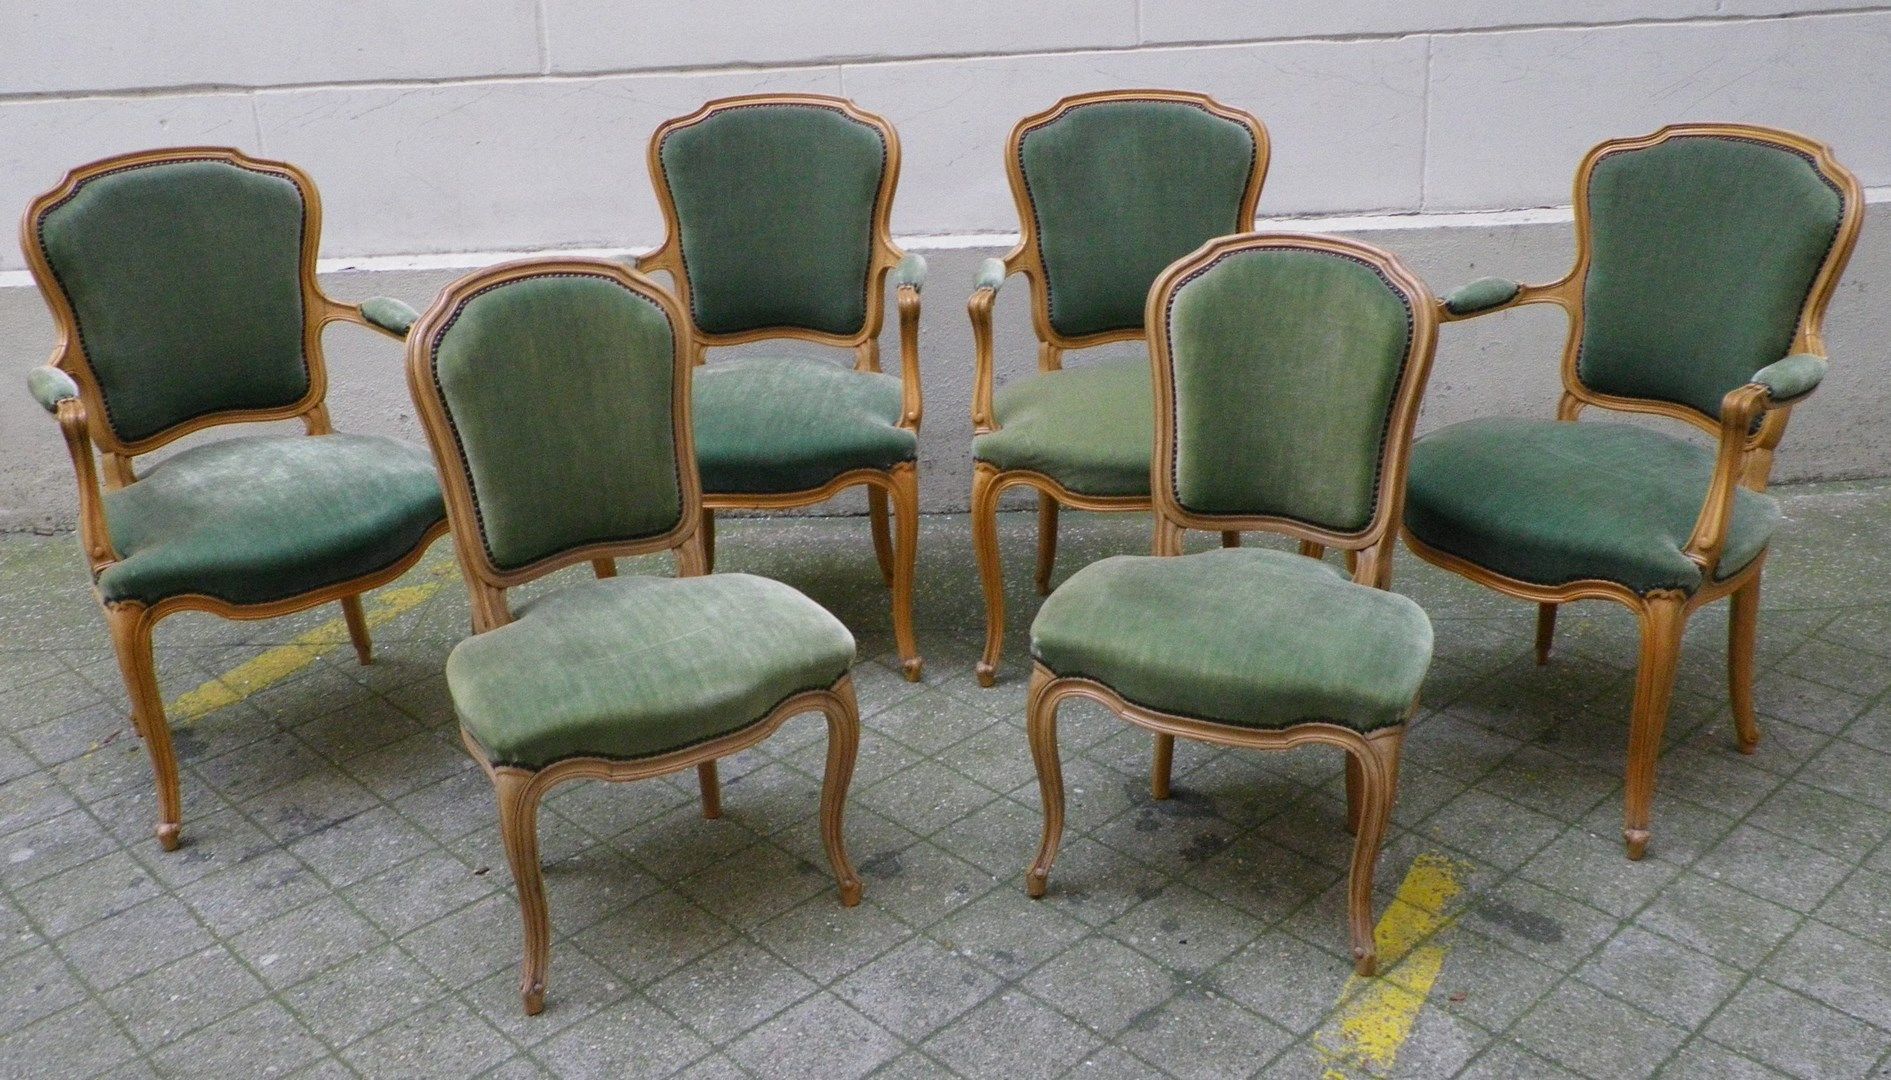 Null 由四张卡布丽塔和两把椅子组成的套房，用绿色天鹅绒装饰。

座椅和框架状况良好。